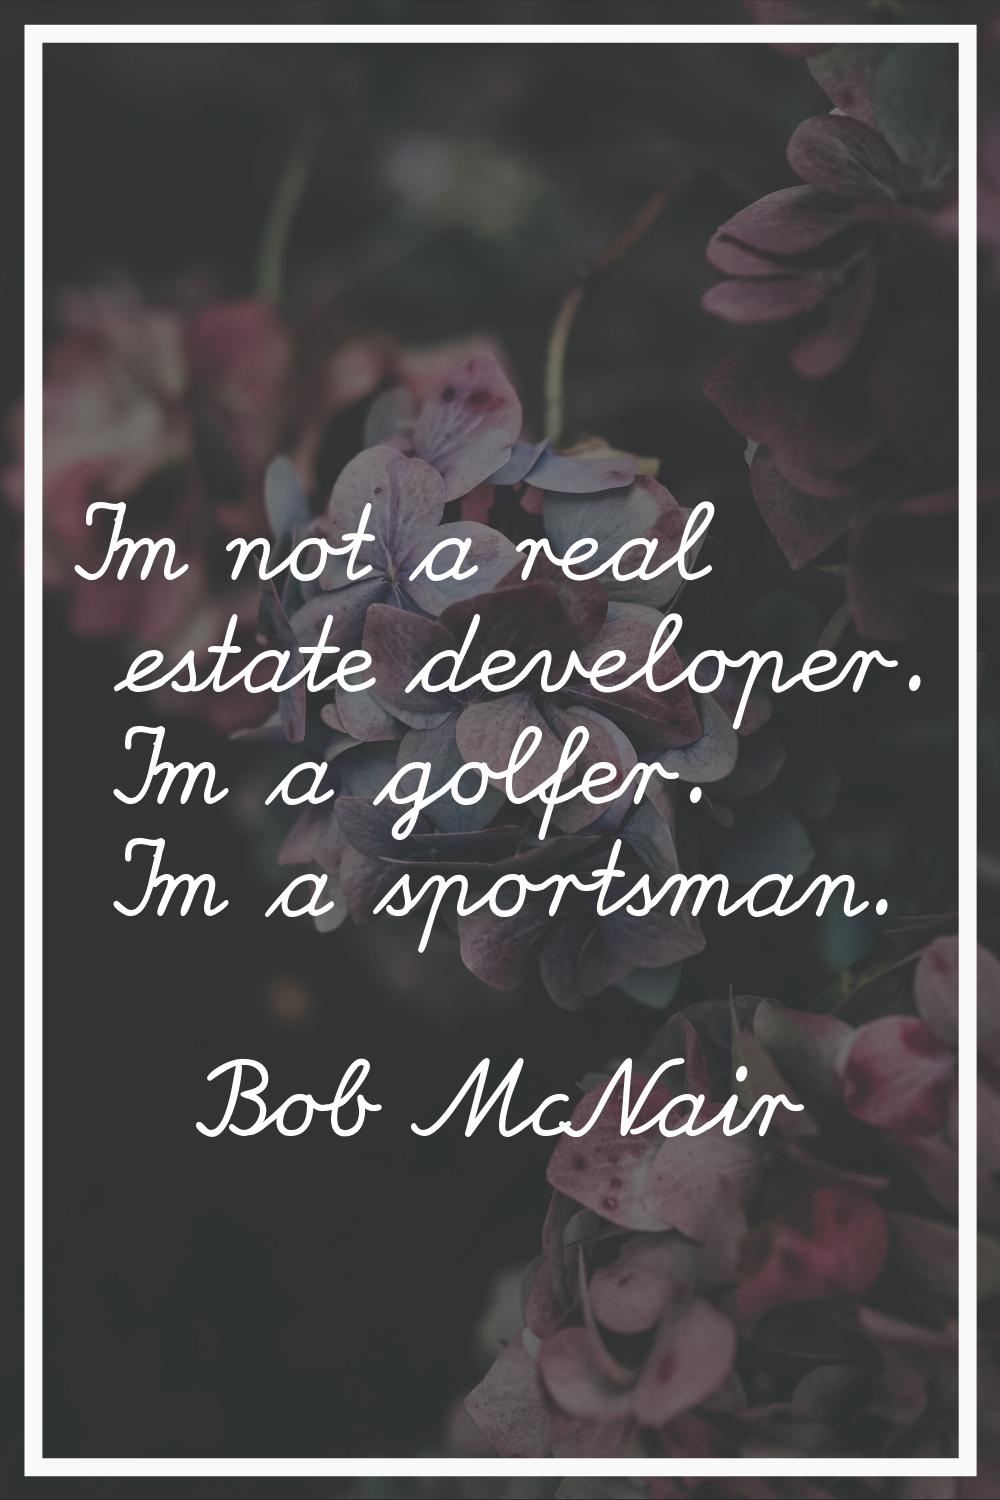 I'm not a real estate developer. I'm a golfer. I'm a sportsman.